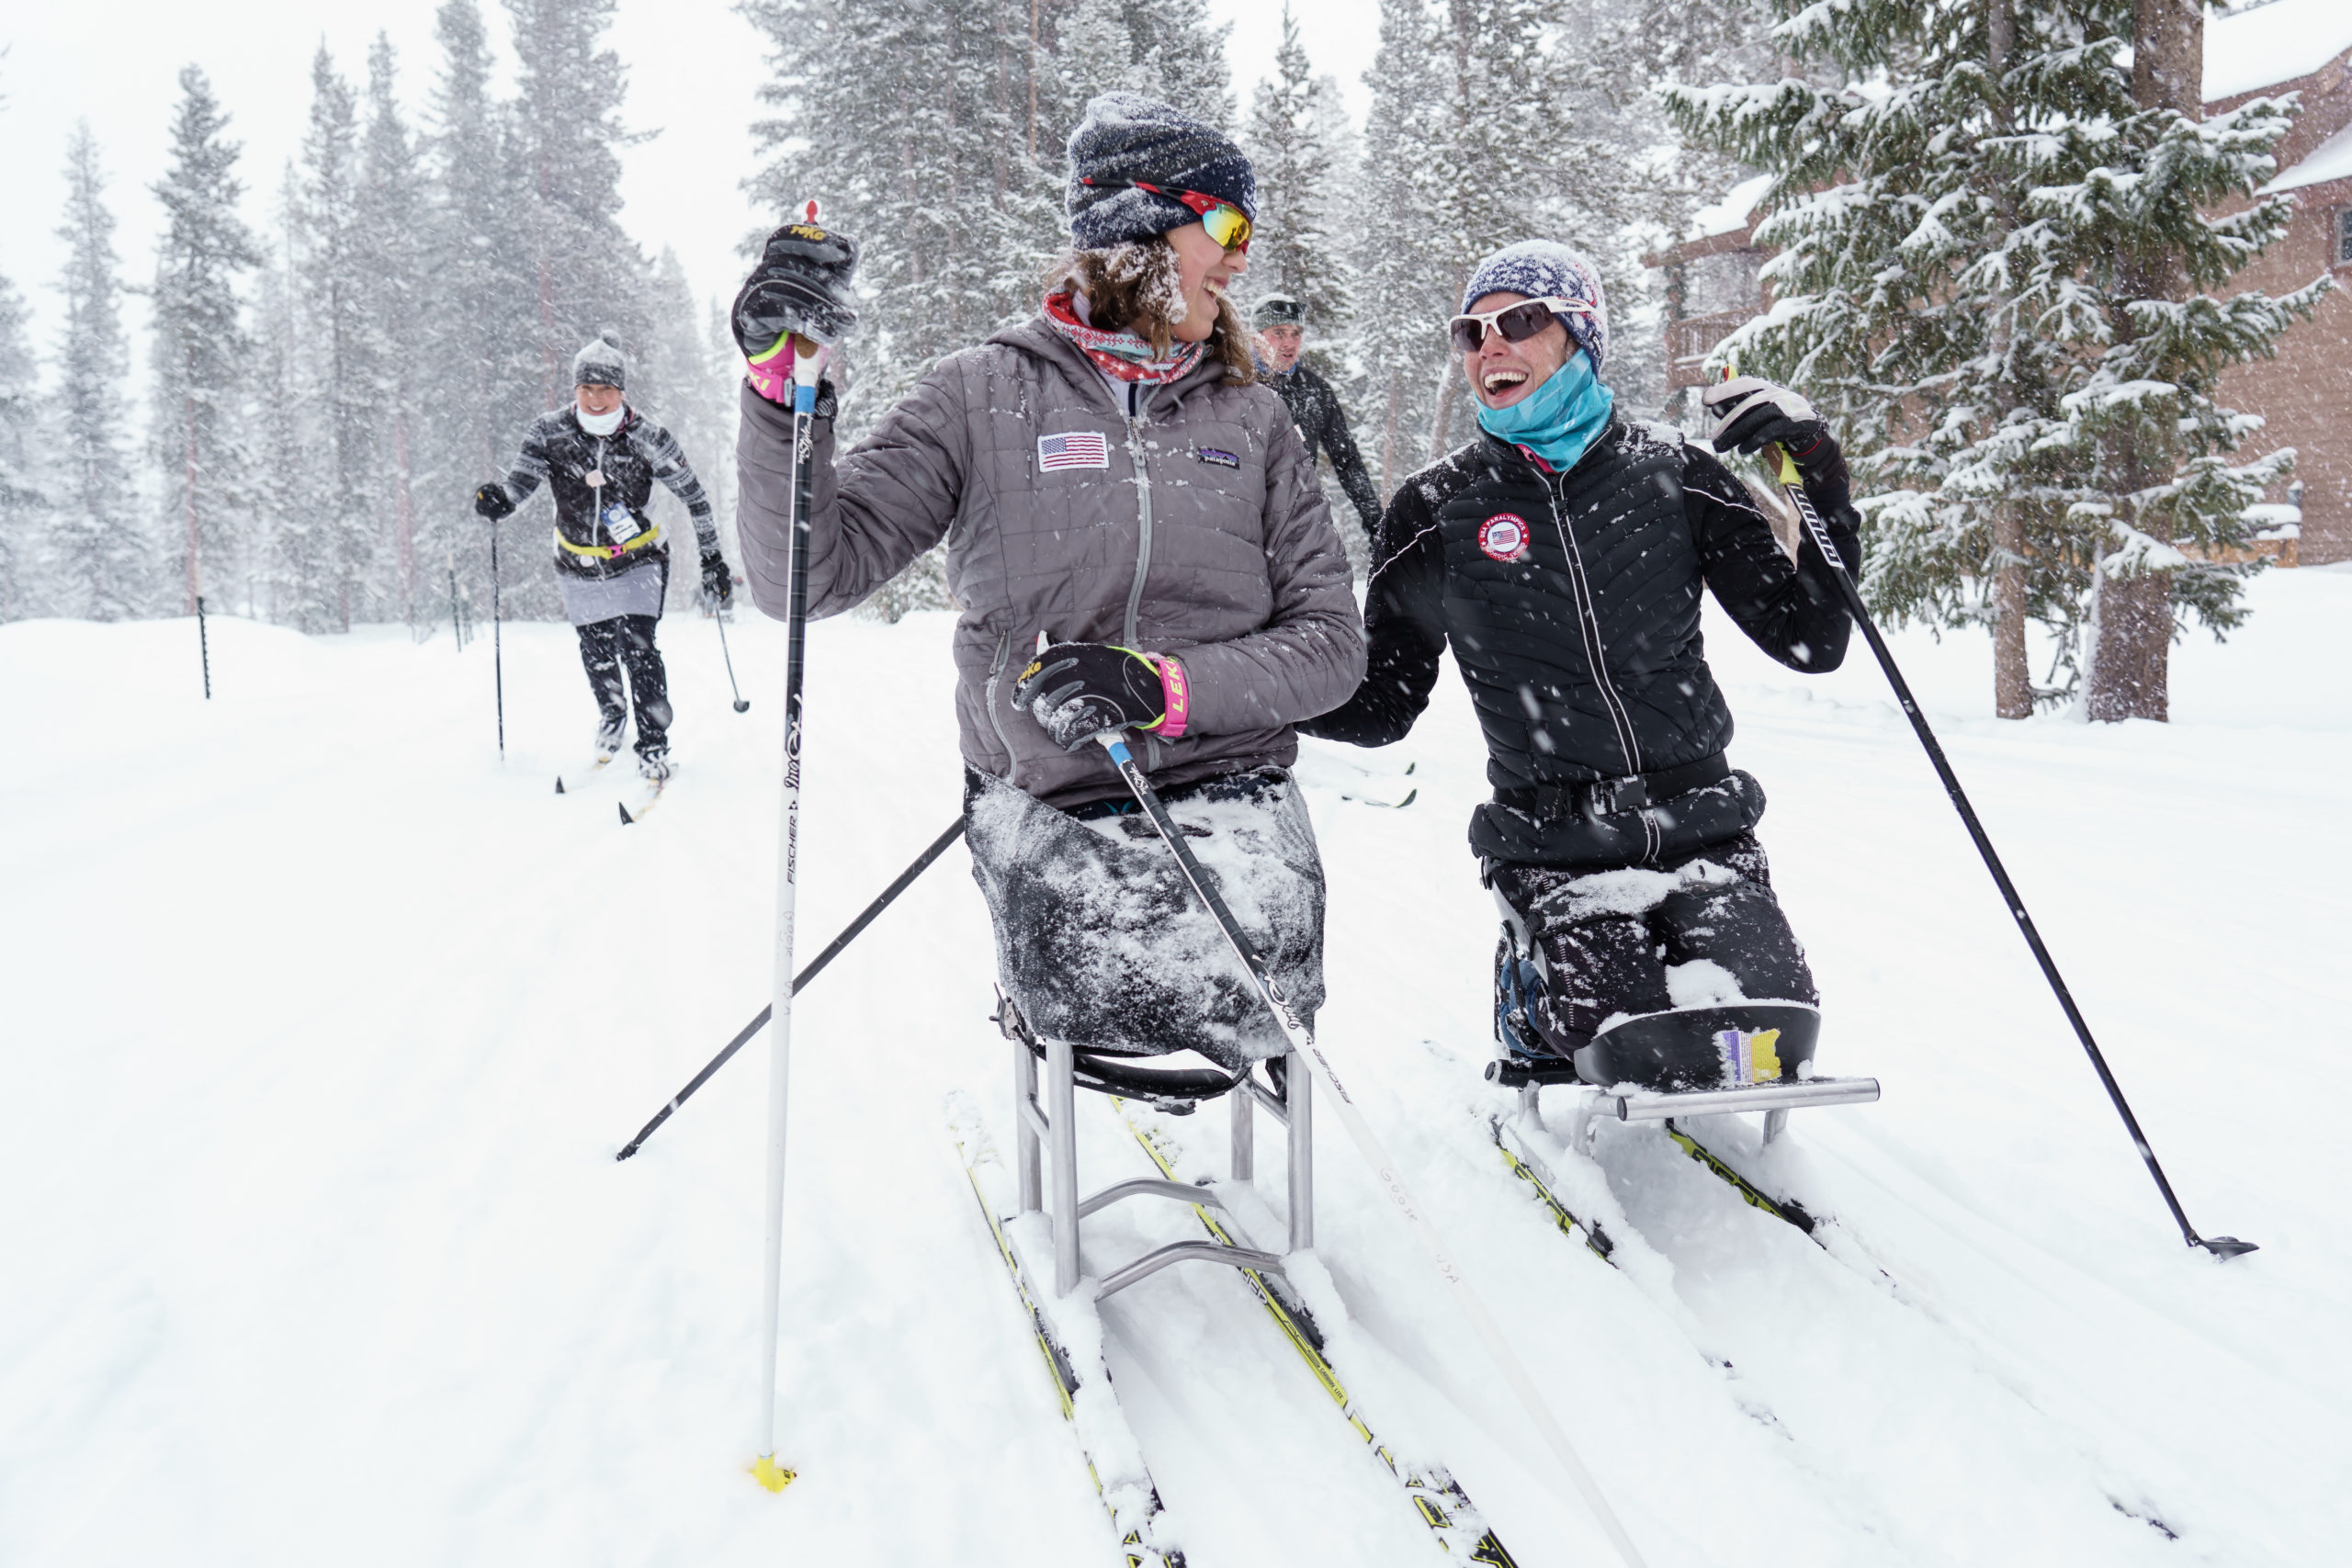 Ski Spec athletes on bi-skis skiing down slope smiling at each other